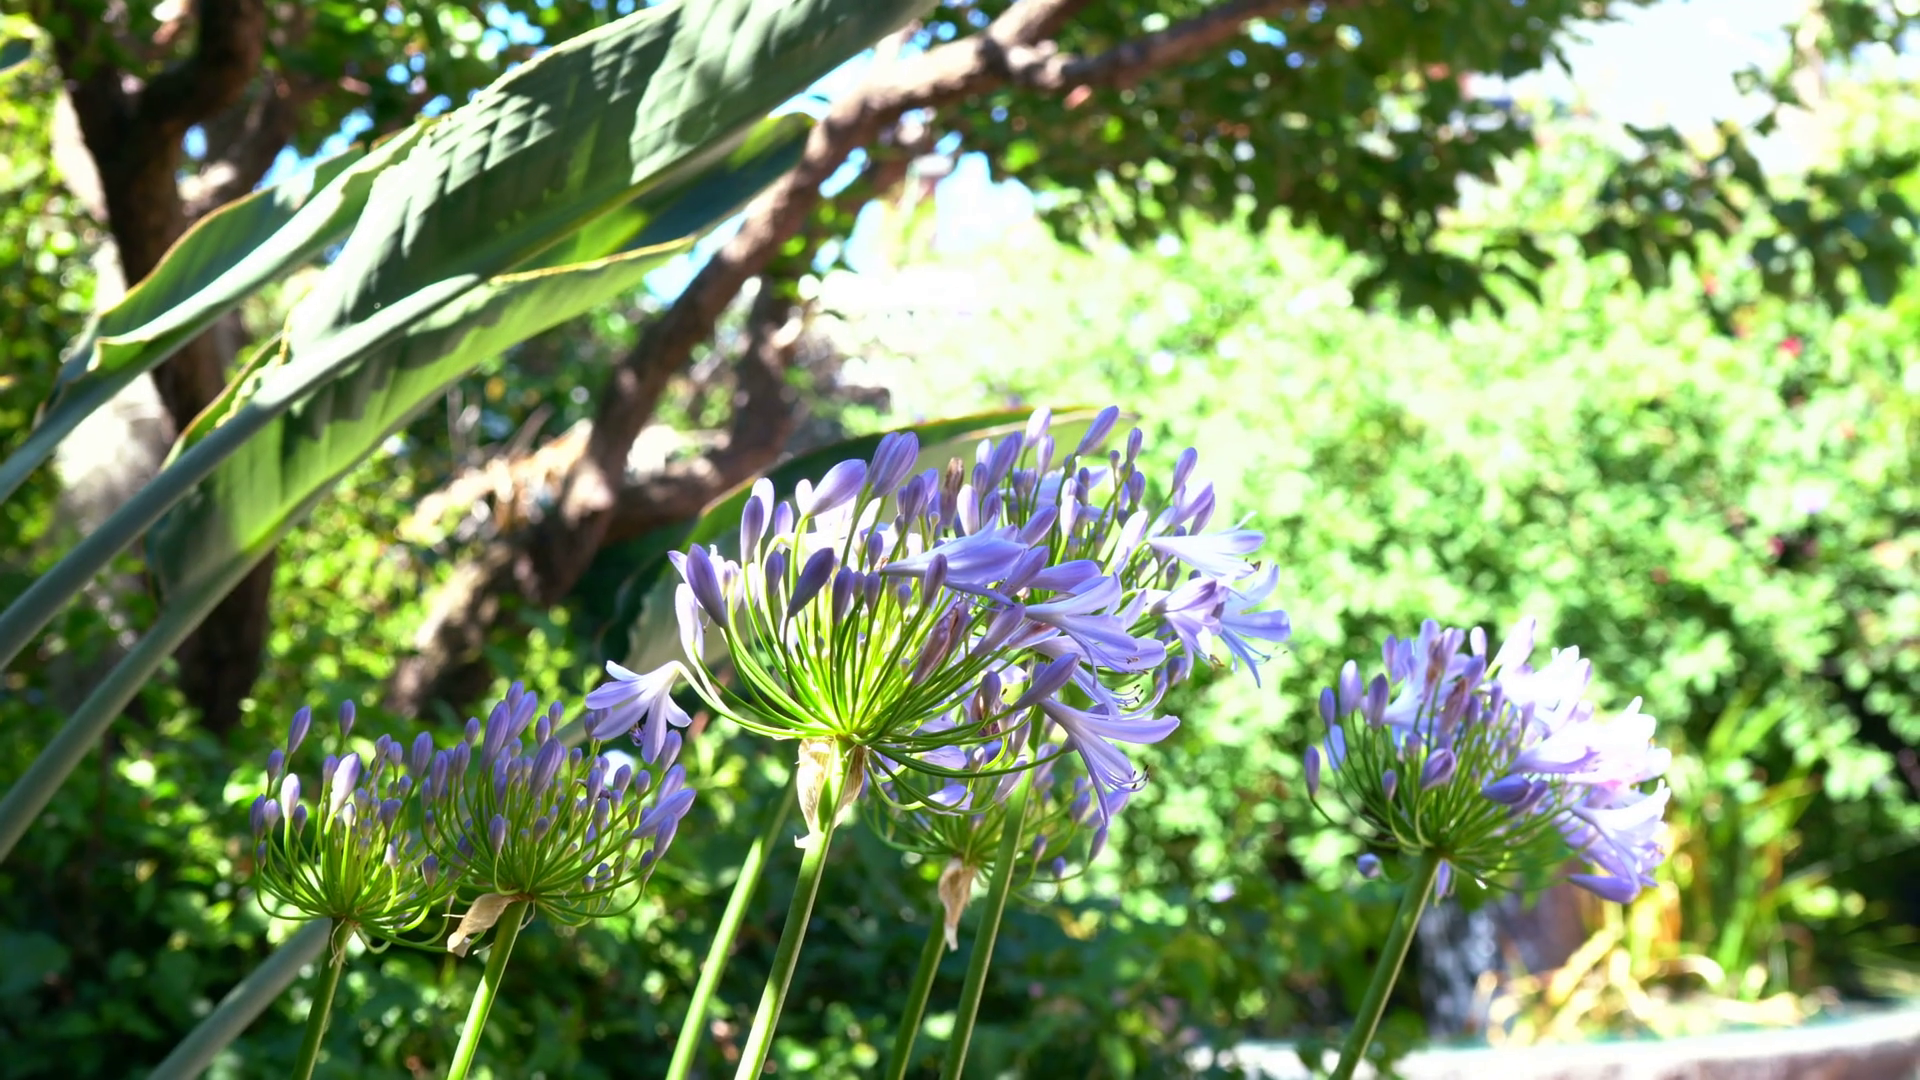 Spring flowering agapanthus africanus plants in natural garden setting,  handheld. Stock Video Footage.